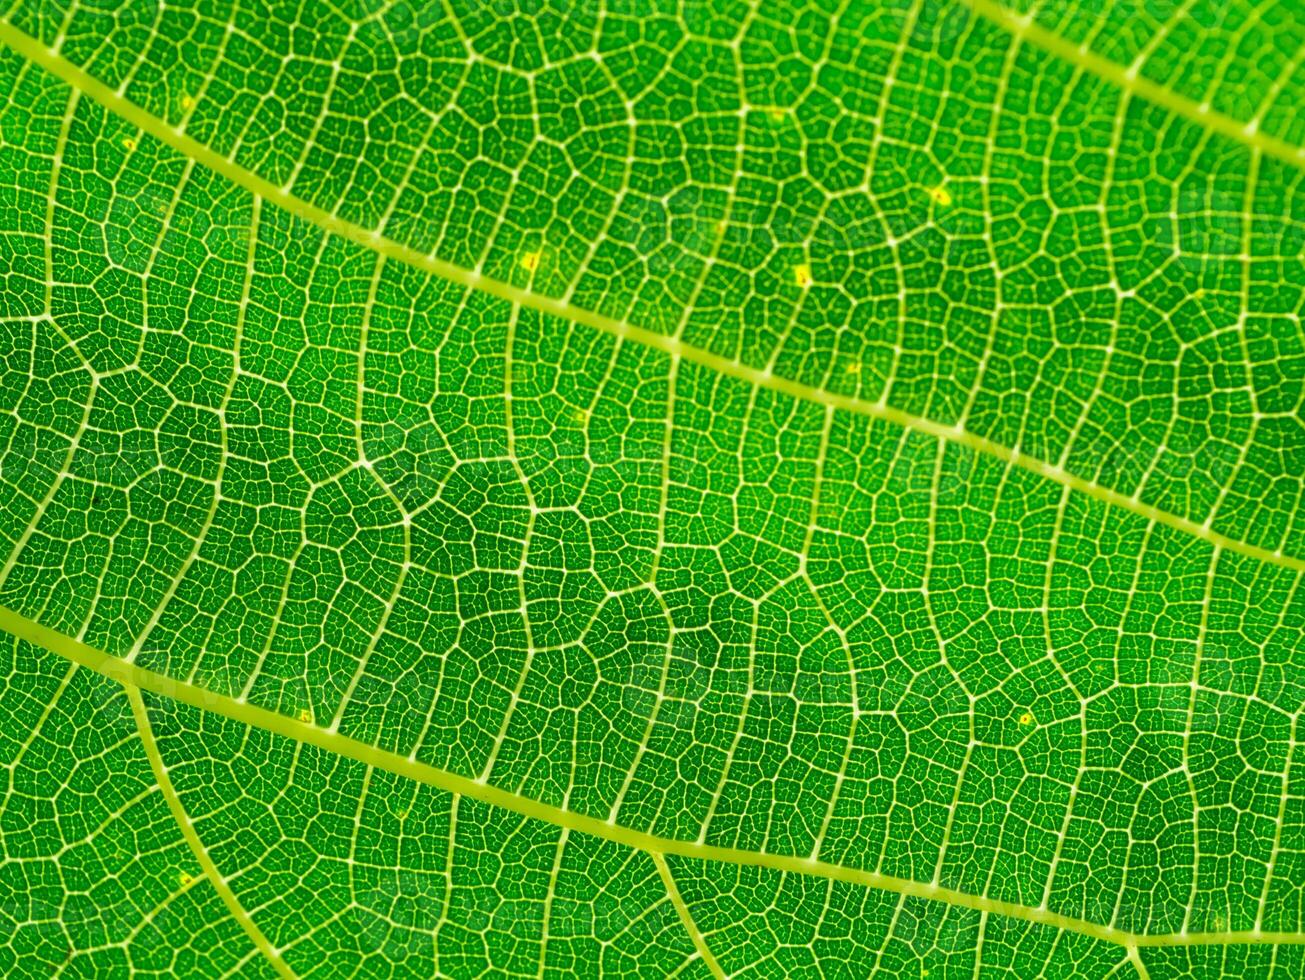 Close up green leaf wallpaper. photo